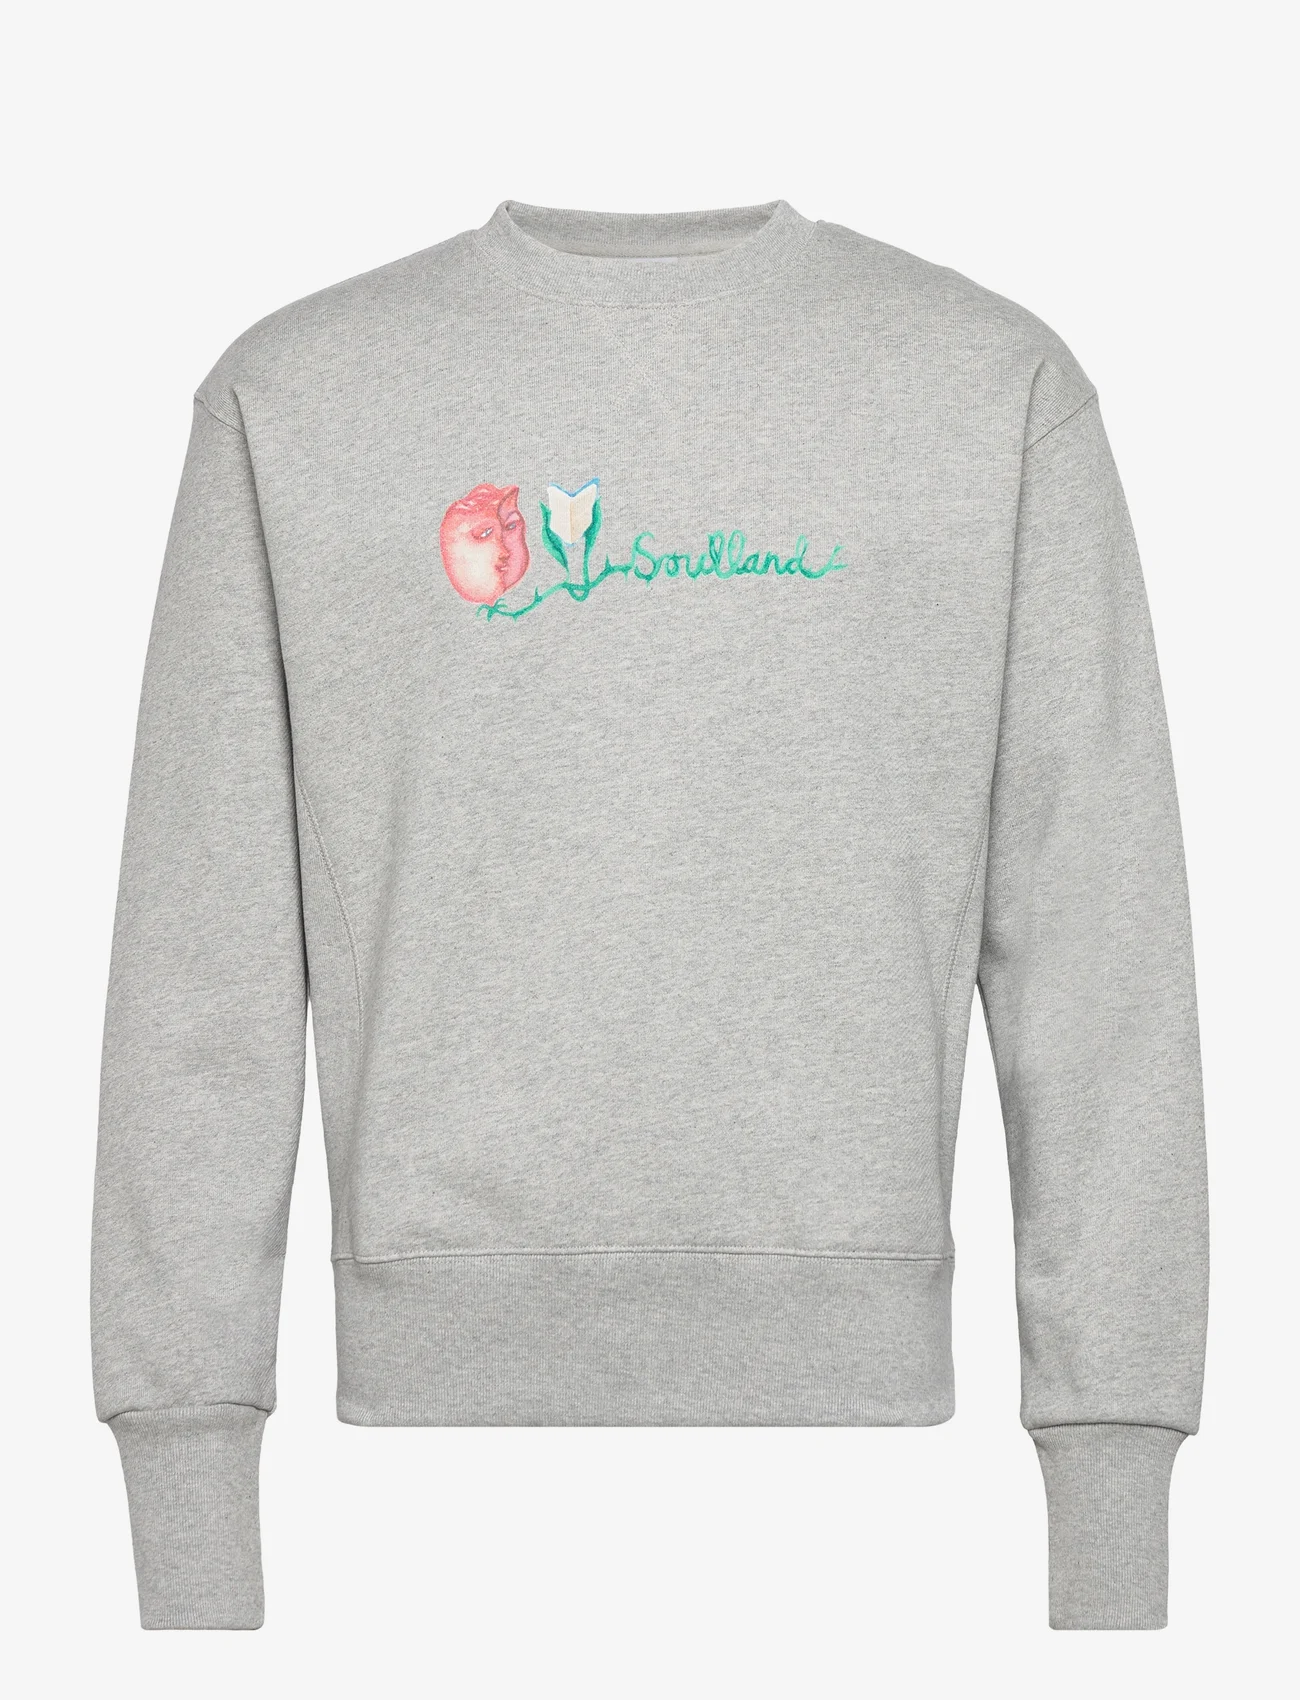 Soulland - Flower Logo sweatshirt - sweatshirts - grey melange - 0